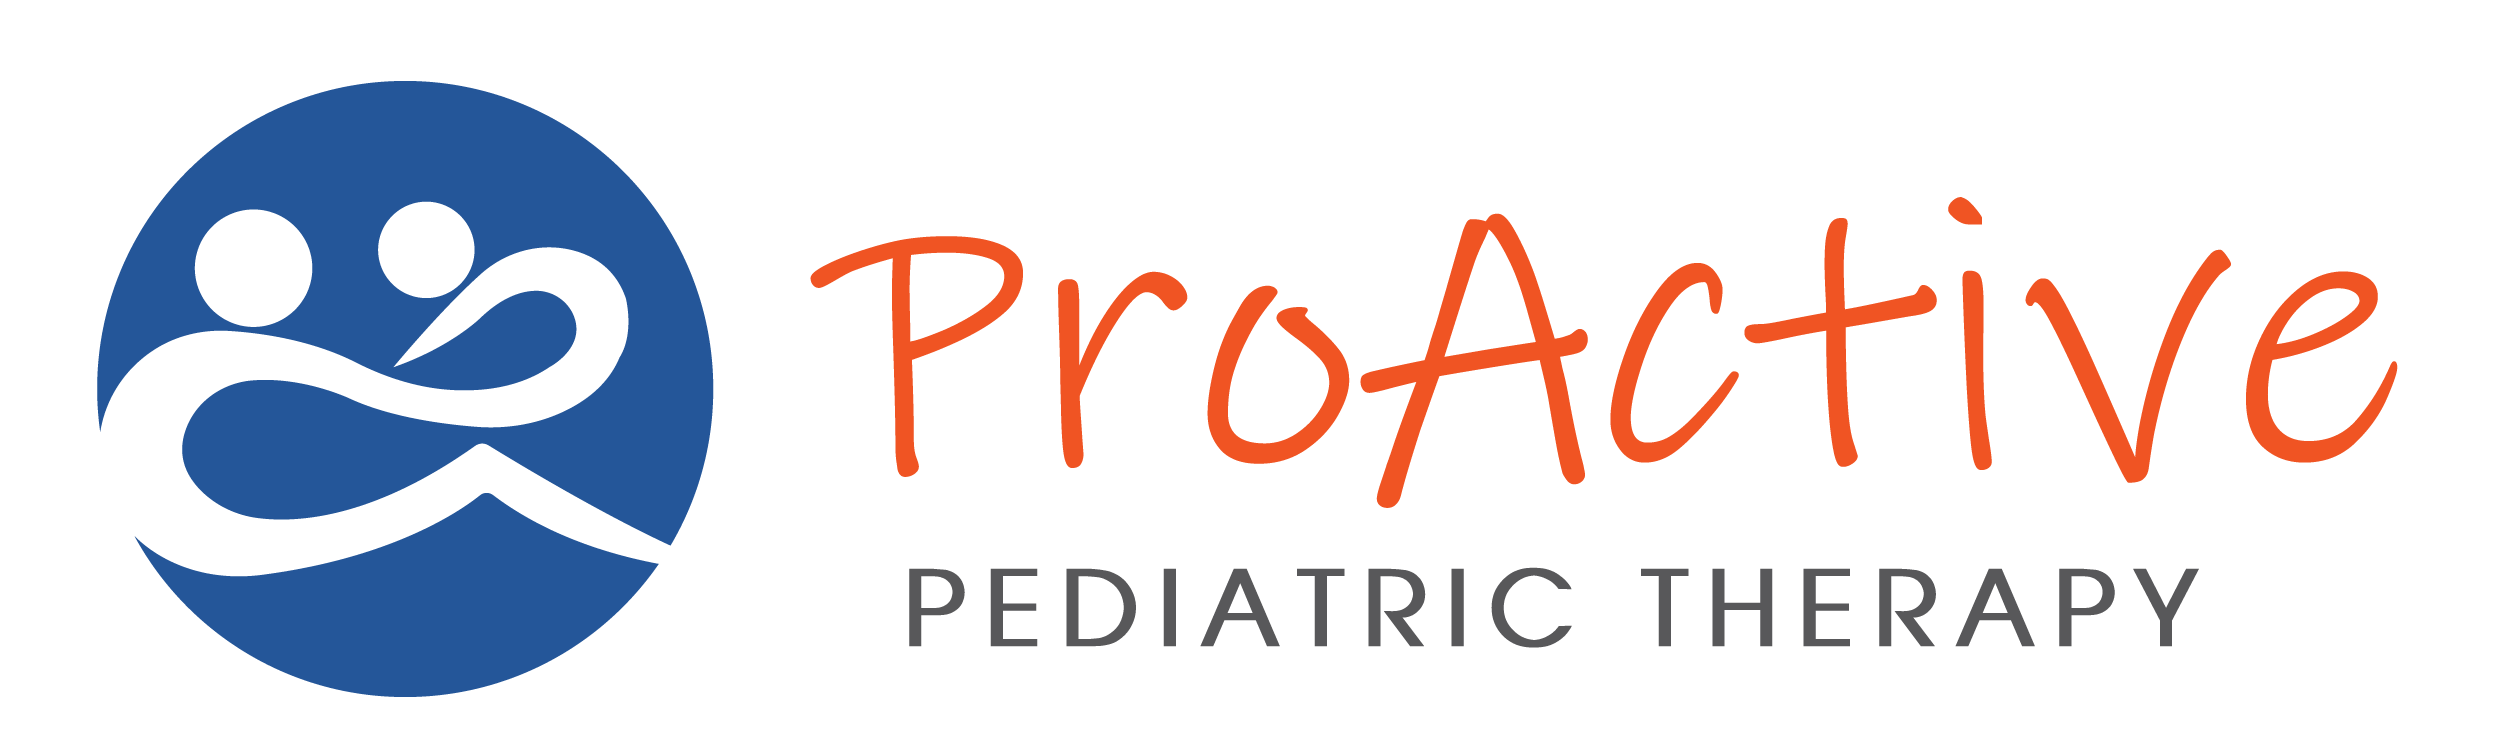 Proactive Pediatric Therapy